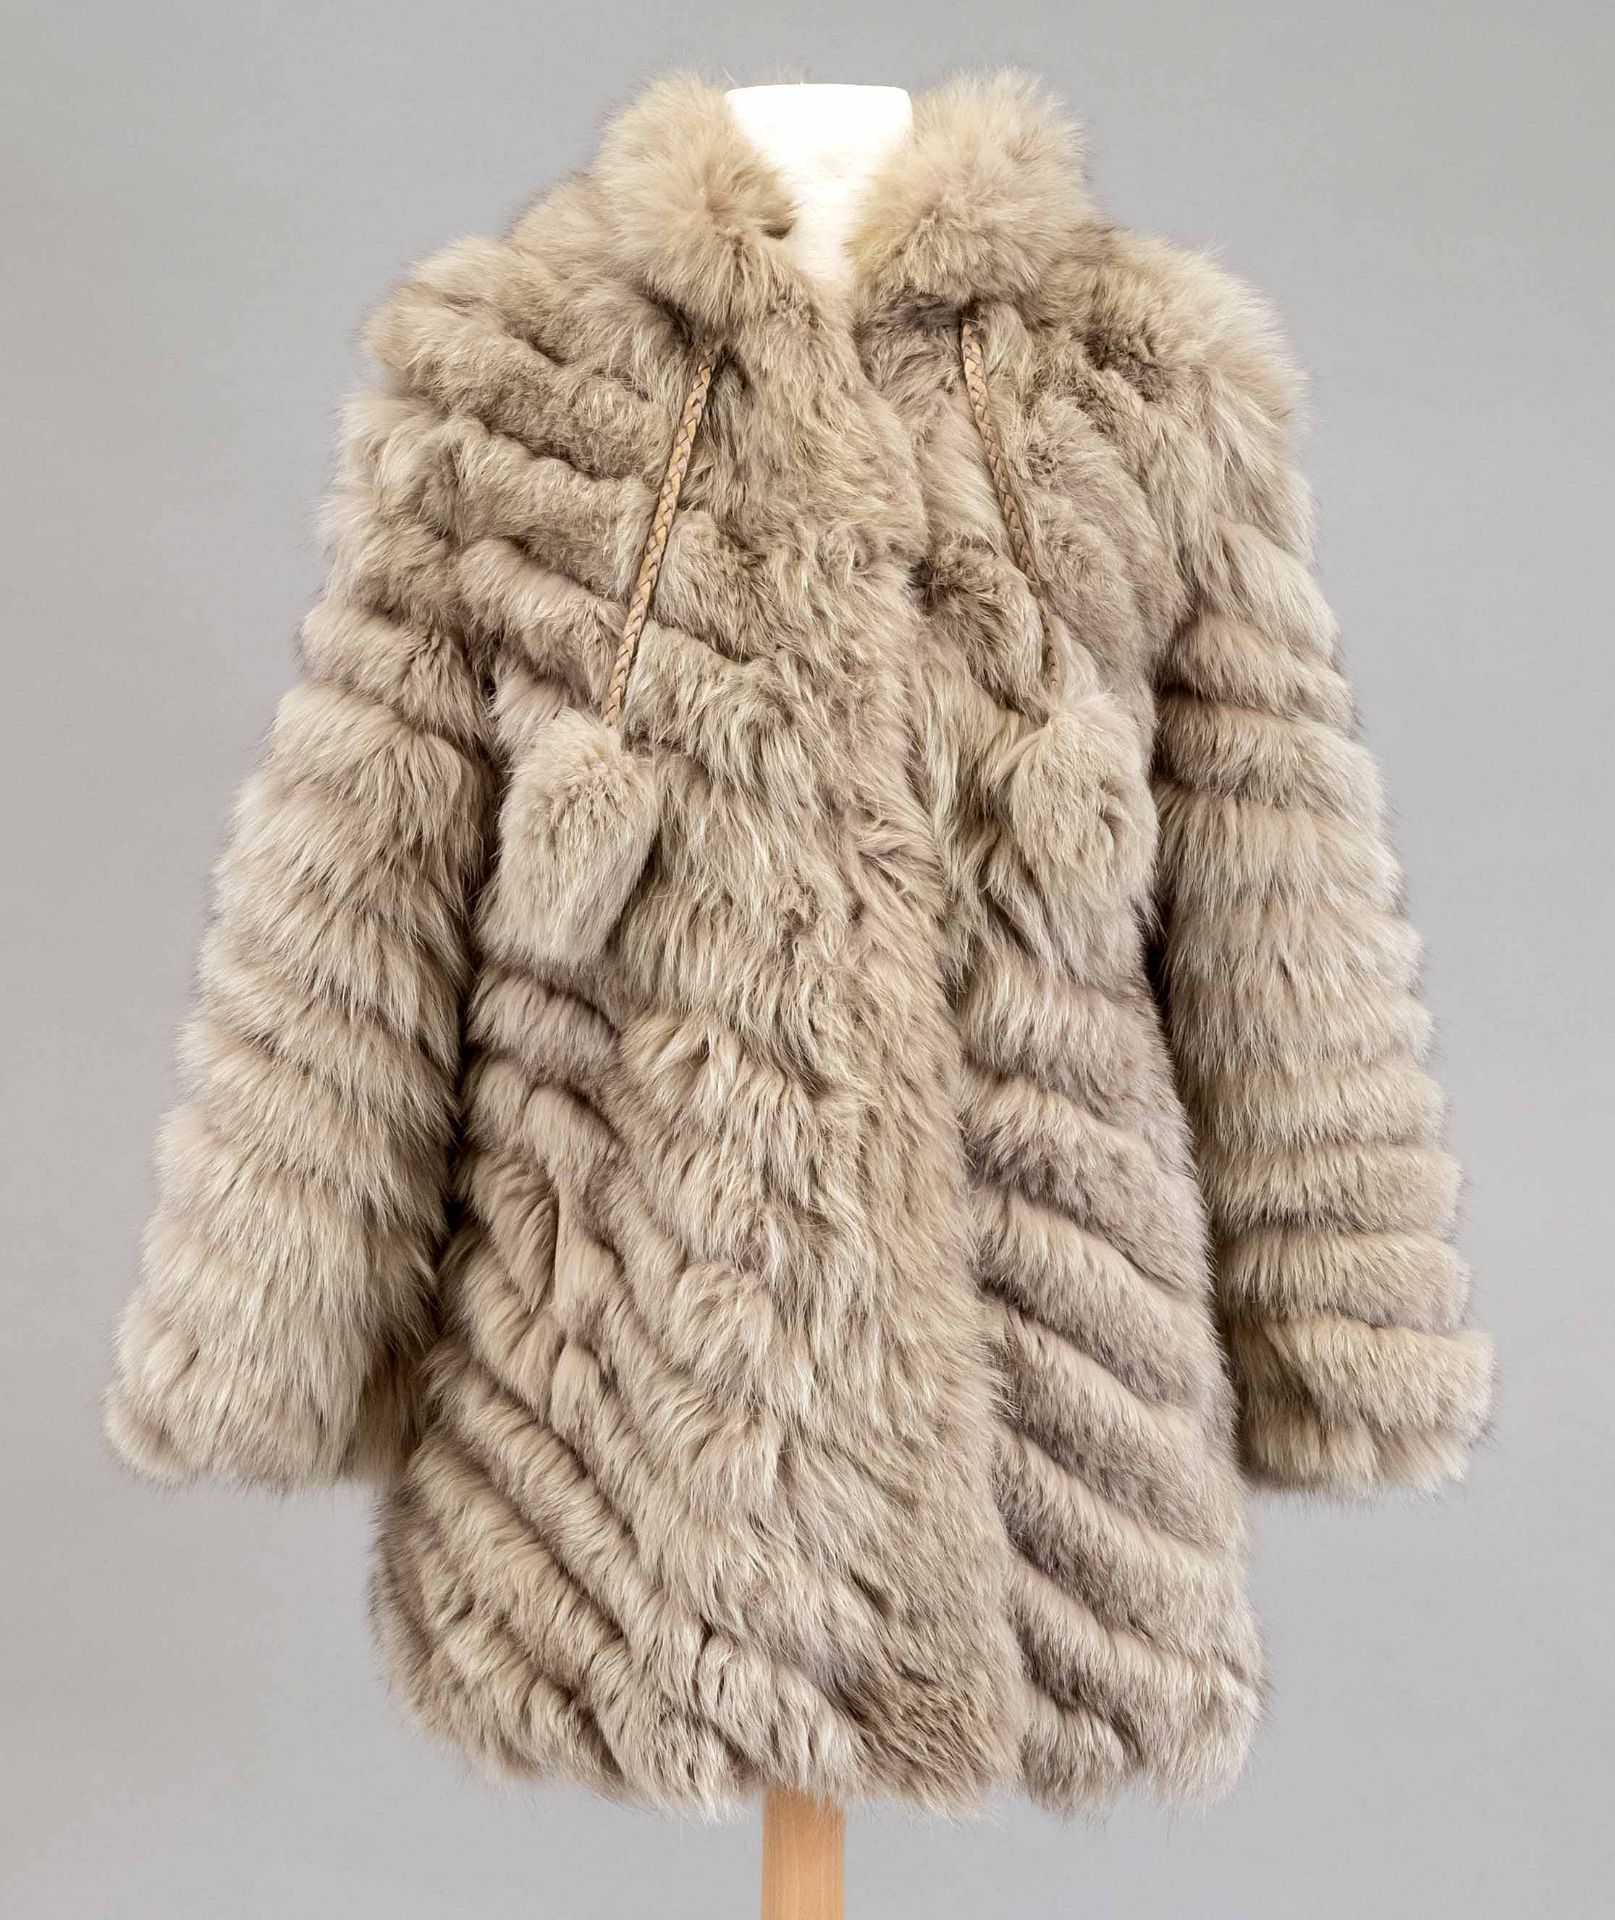 Gray ladies fox jacket, horizontal stripes, no name or size, light wear marks